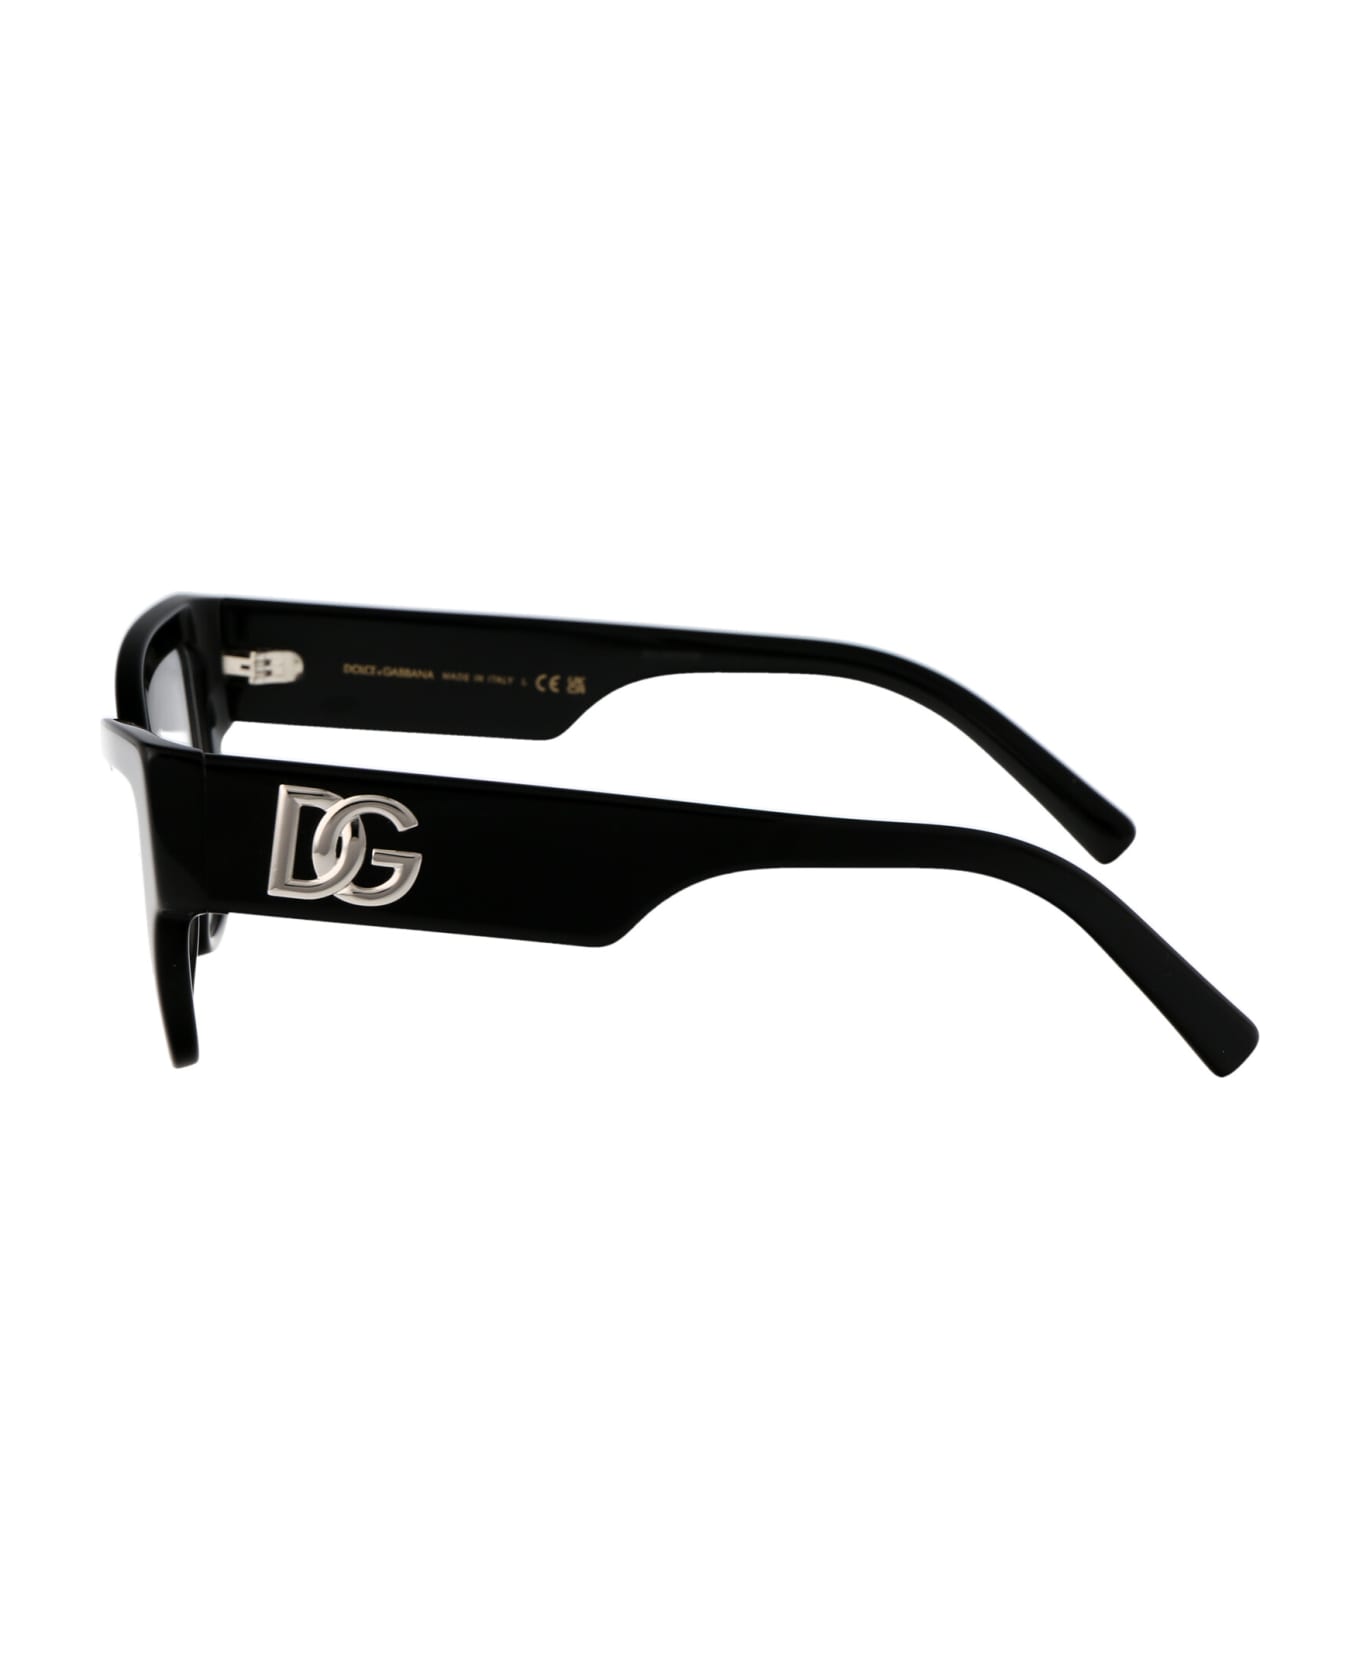 Dolce & Gabbana Eyewear 0dg3378 Glasses - 501 BLACK アイウェア